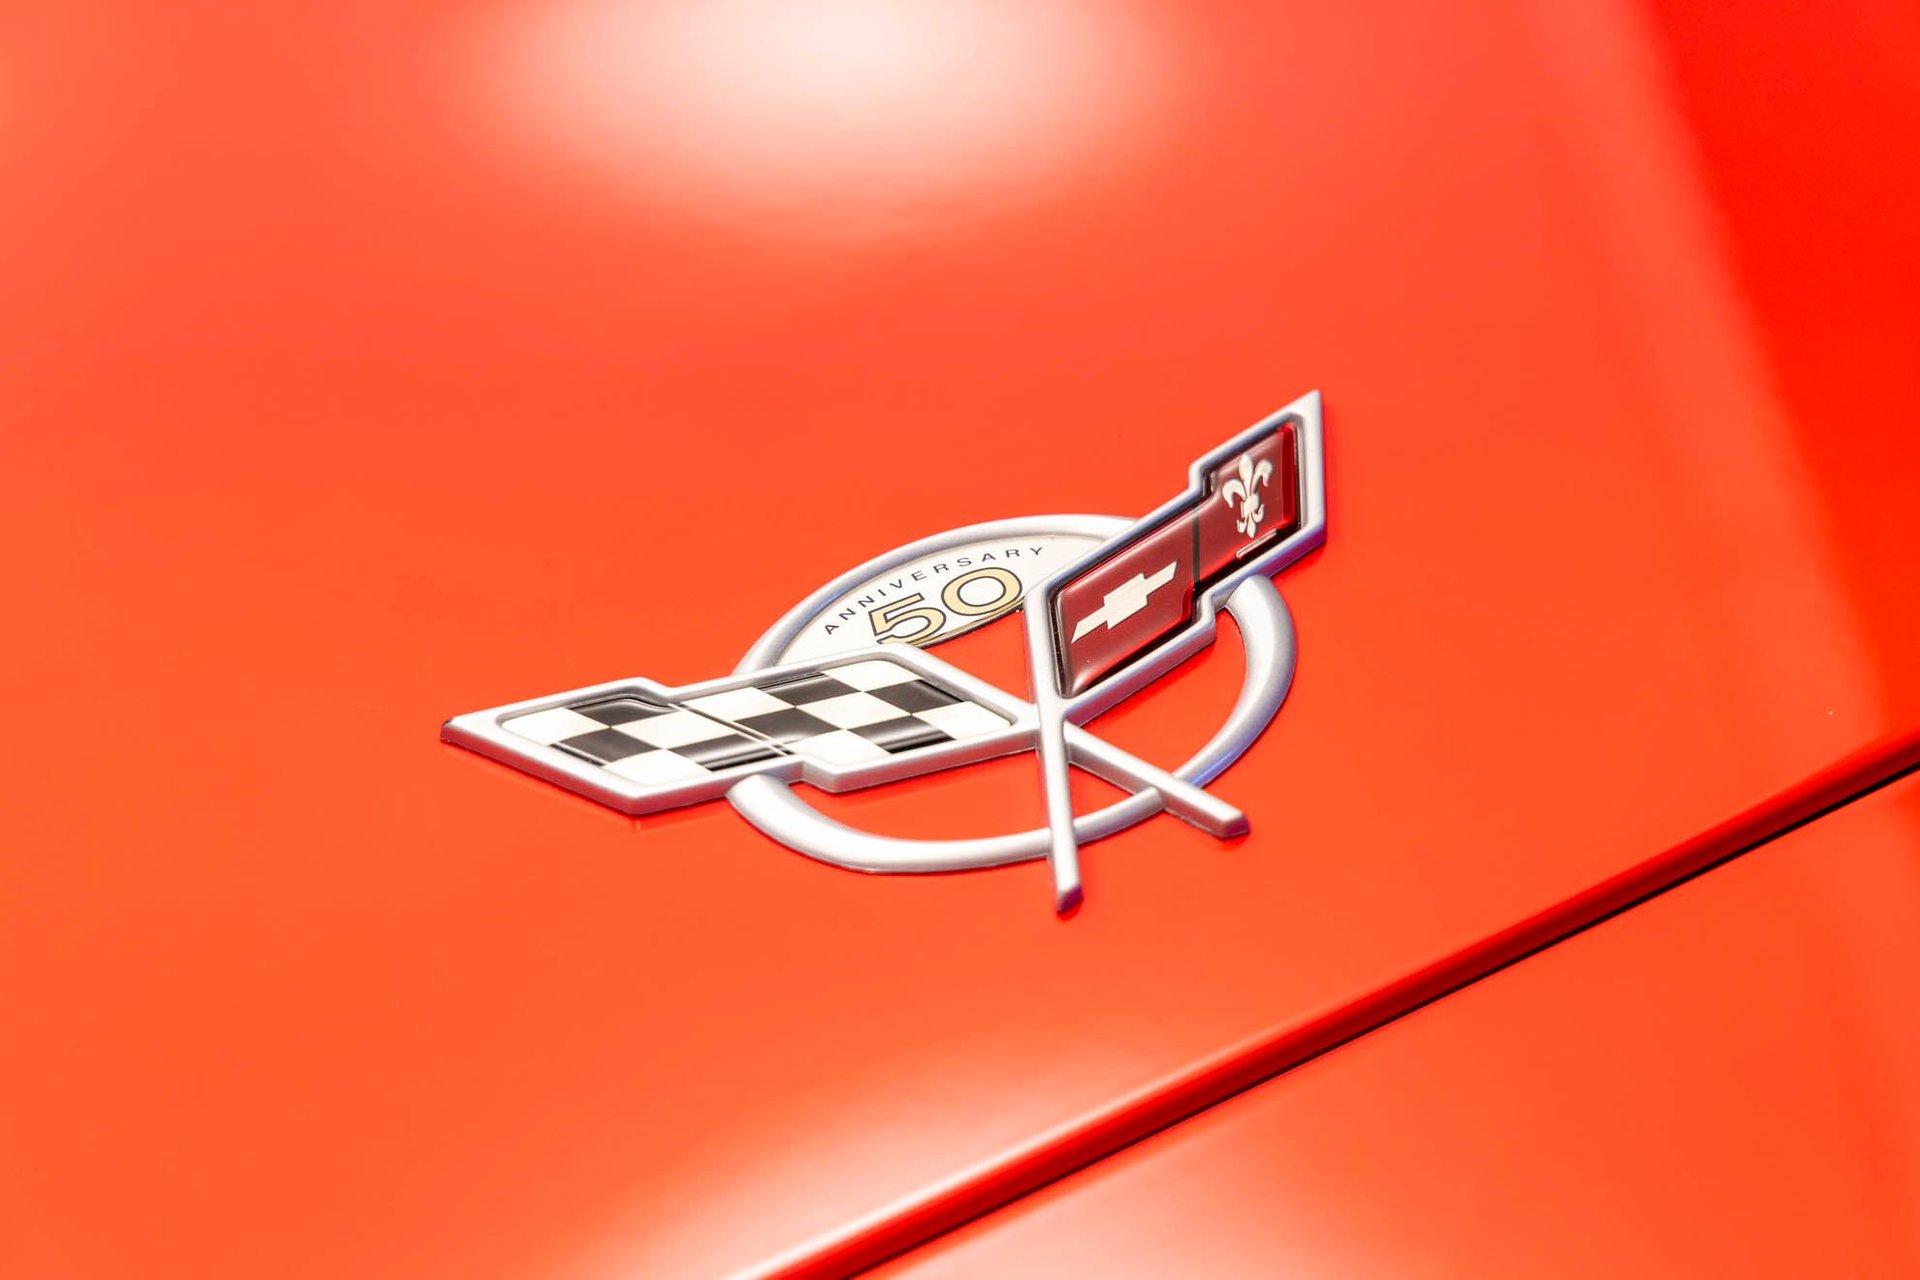 813456 | 2003 Chevrolet Corvette Z06 | Throttlestop | Automotive and Motorcycle Consignment Dealer